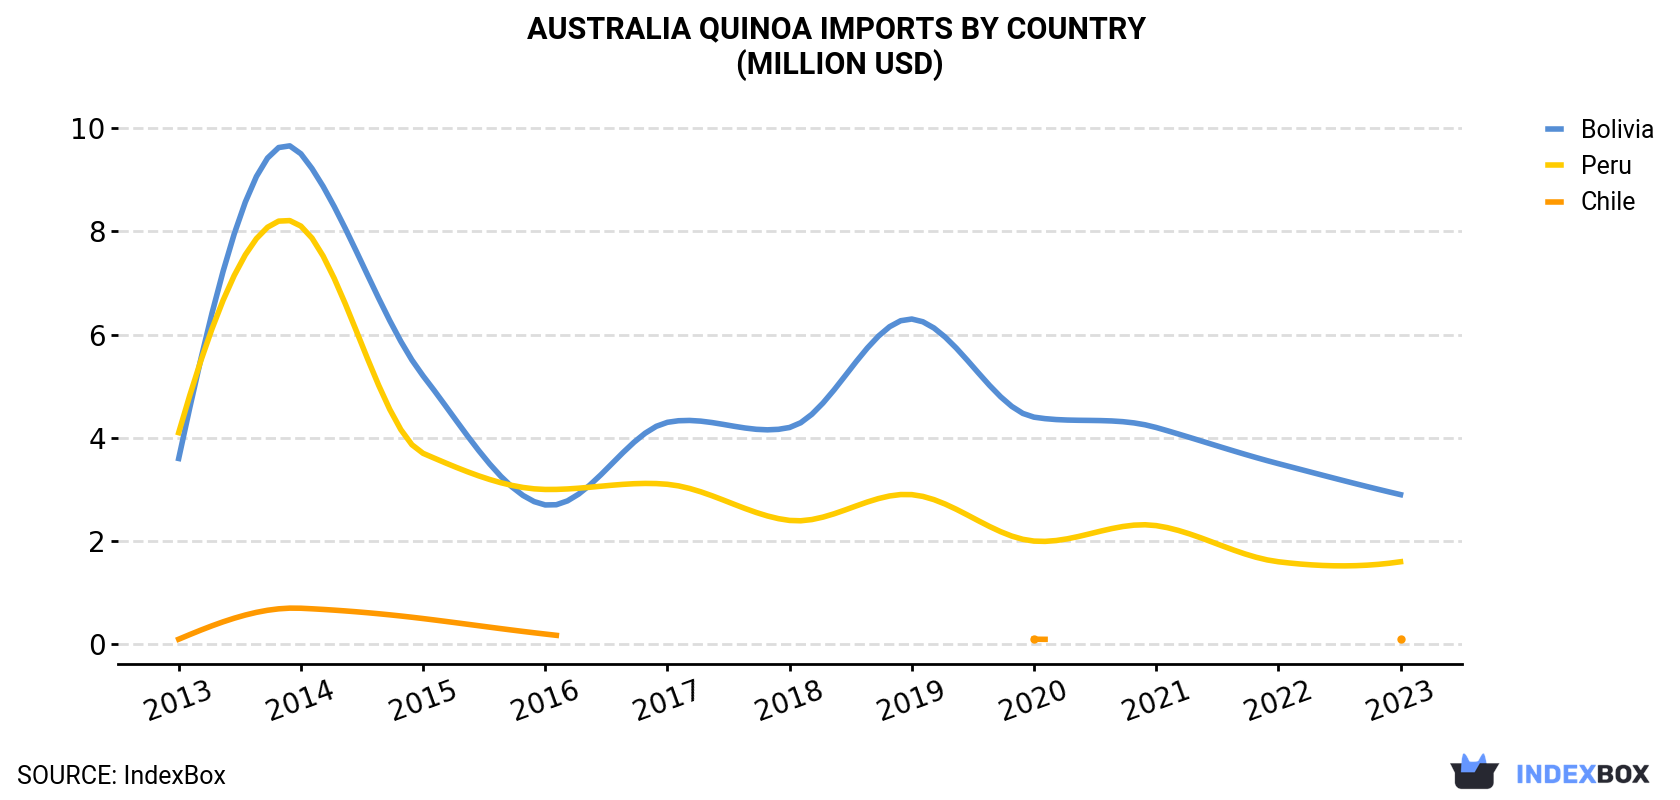 Australia Quinoa Imports By Country (Million USD)